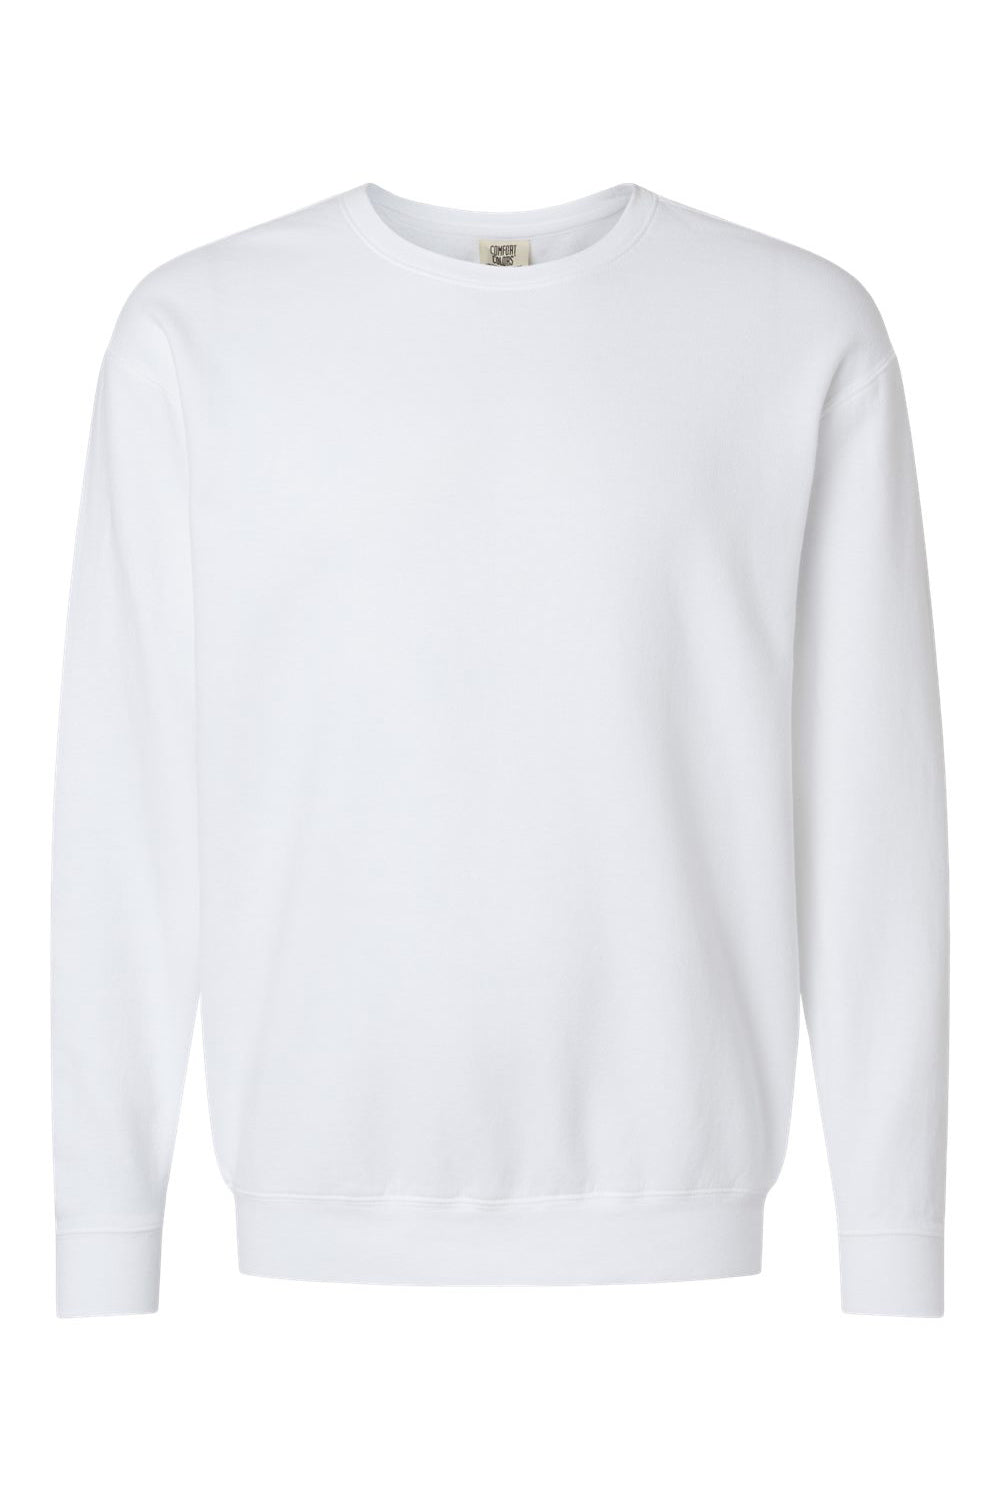 Comfort Colors 1466 Mens Garment Dyed Fleece Crewneck Sweatshirt White Flat Front